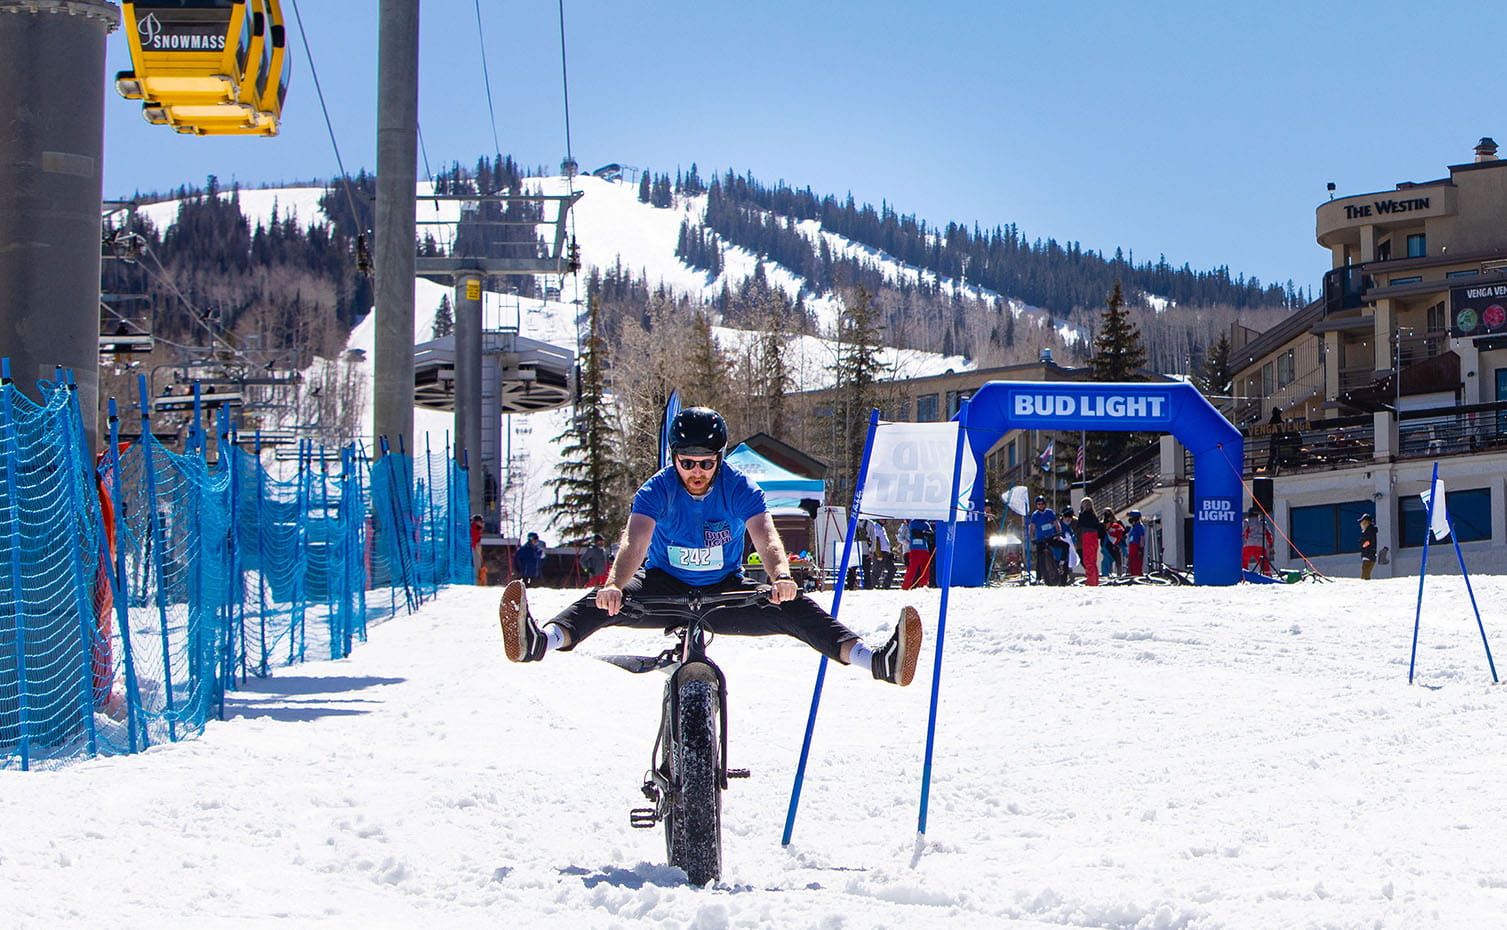 Snow biker taking part in the Bud Light Mountain Challenge race.